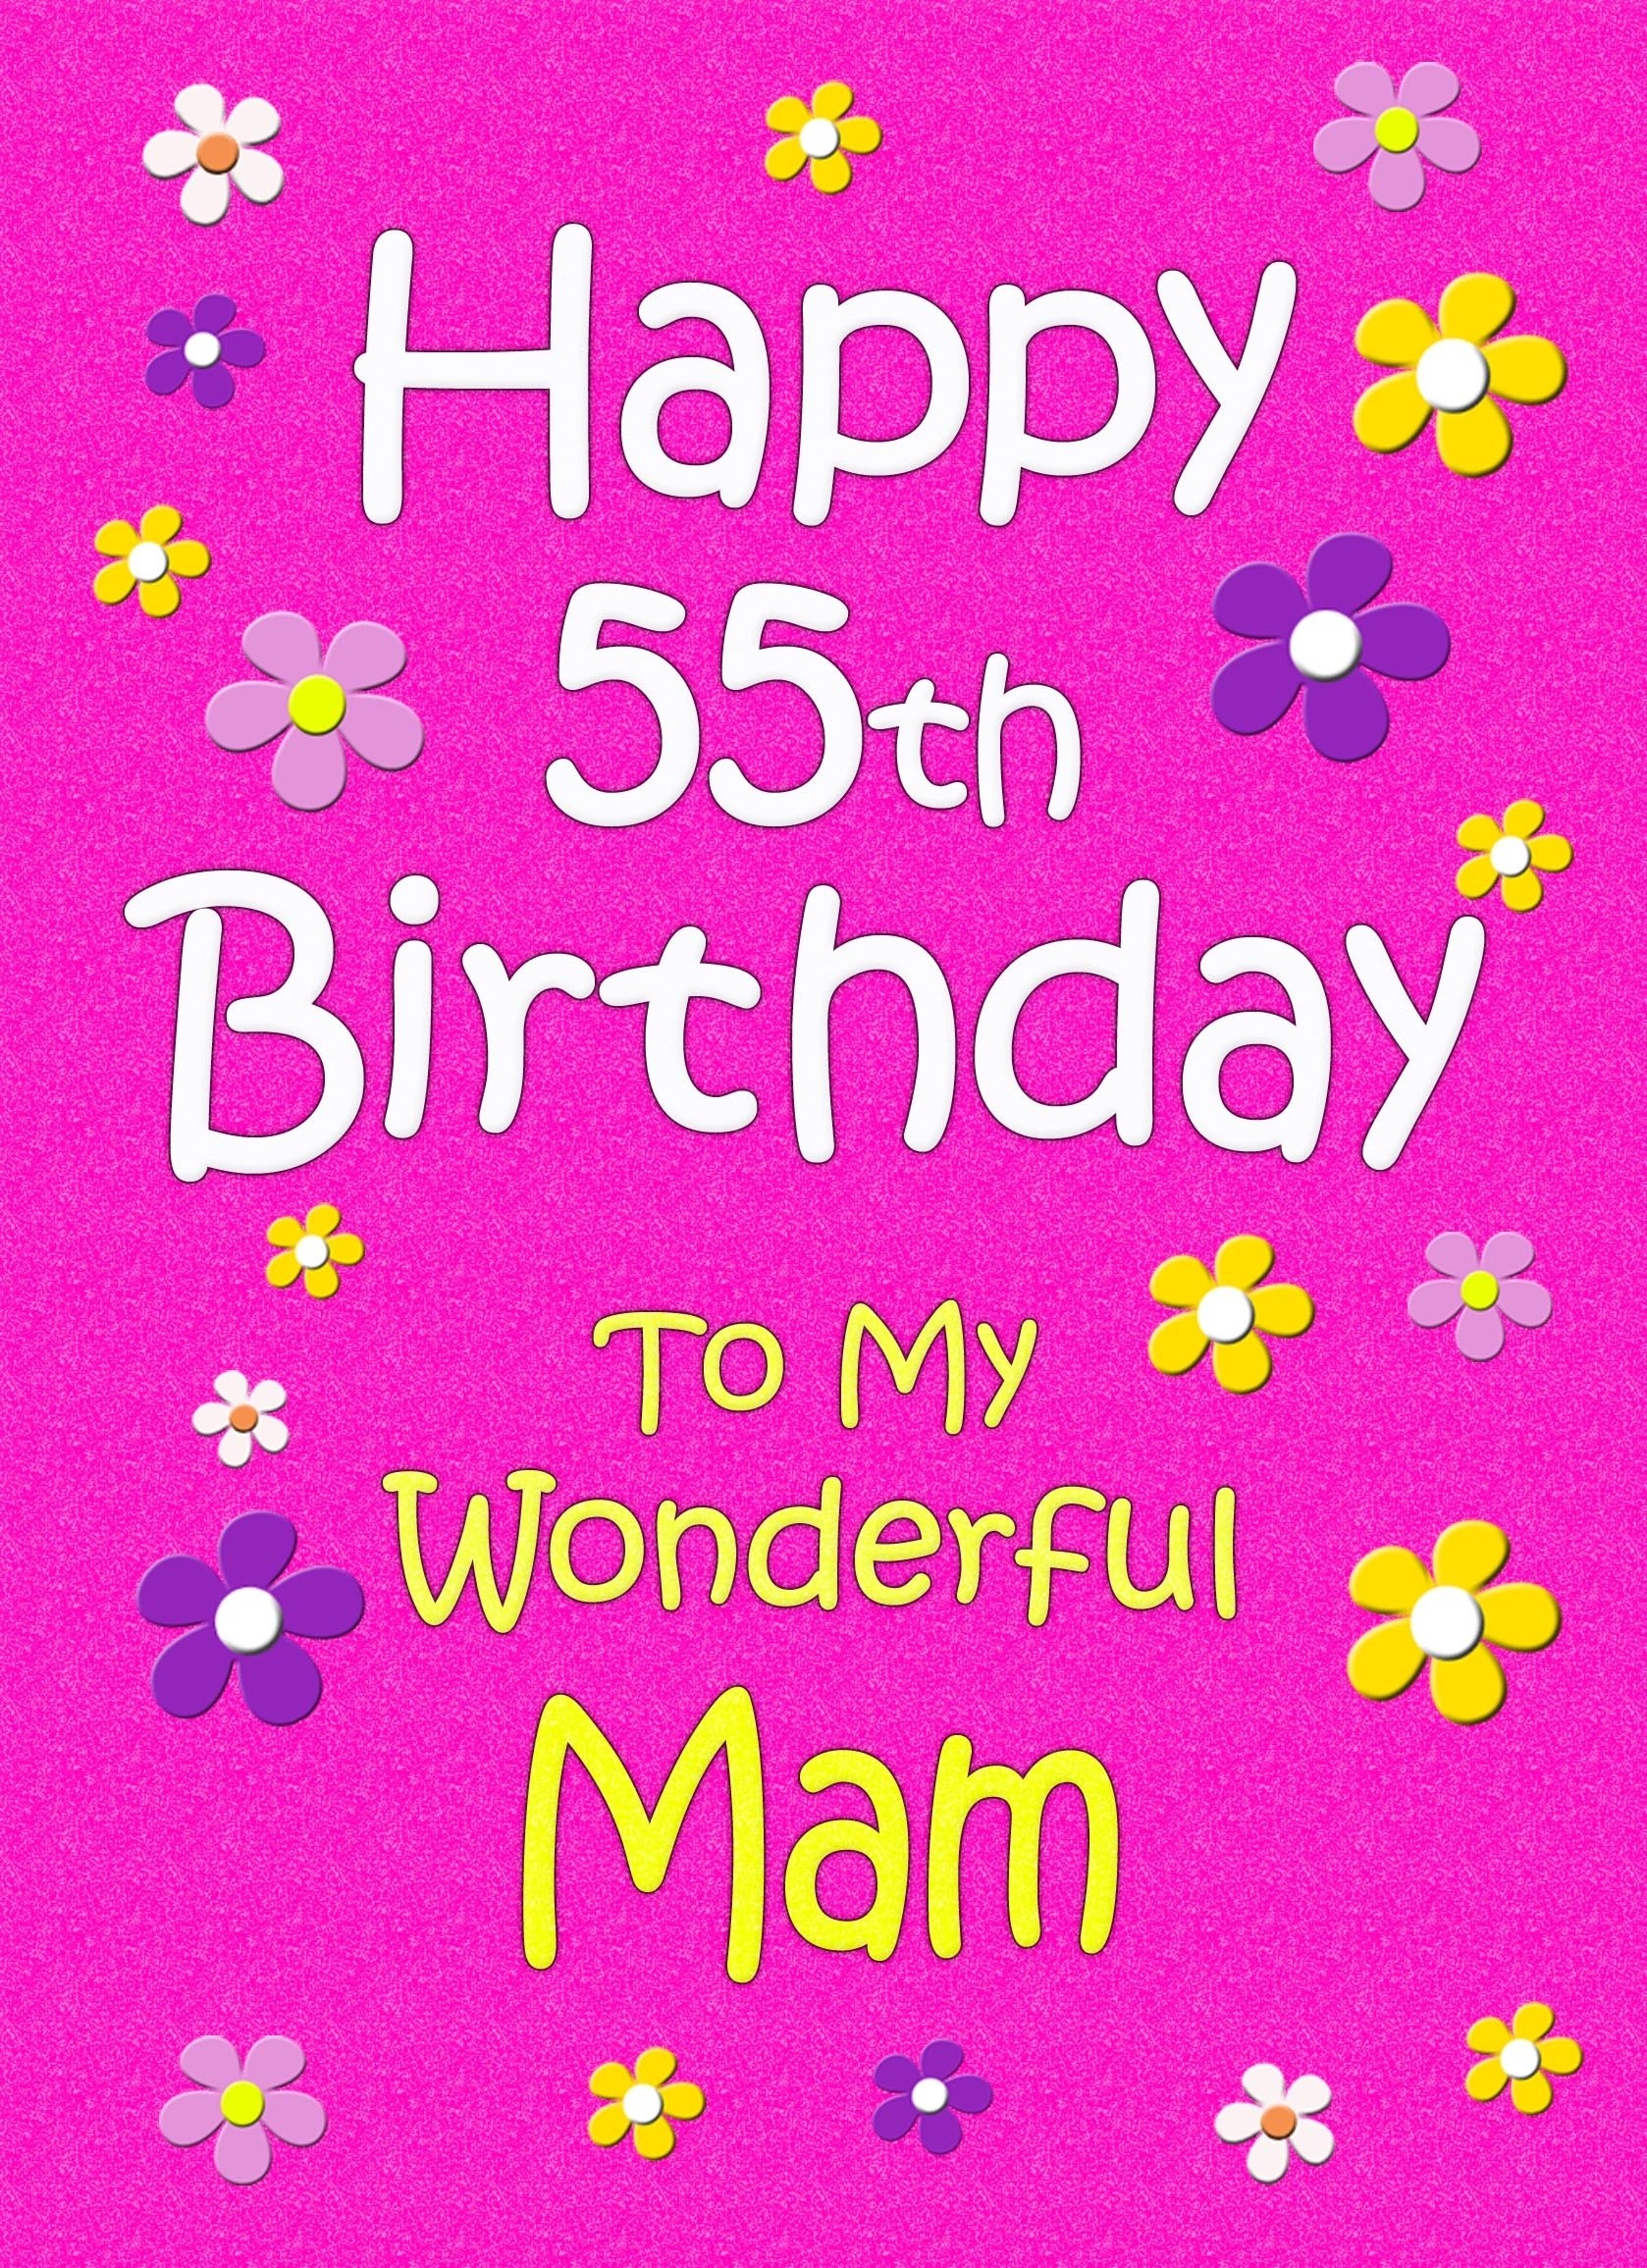 Mam 55th Birthday Card (Pink)